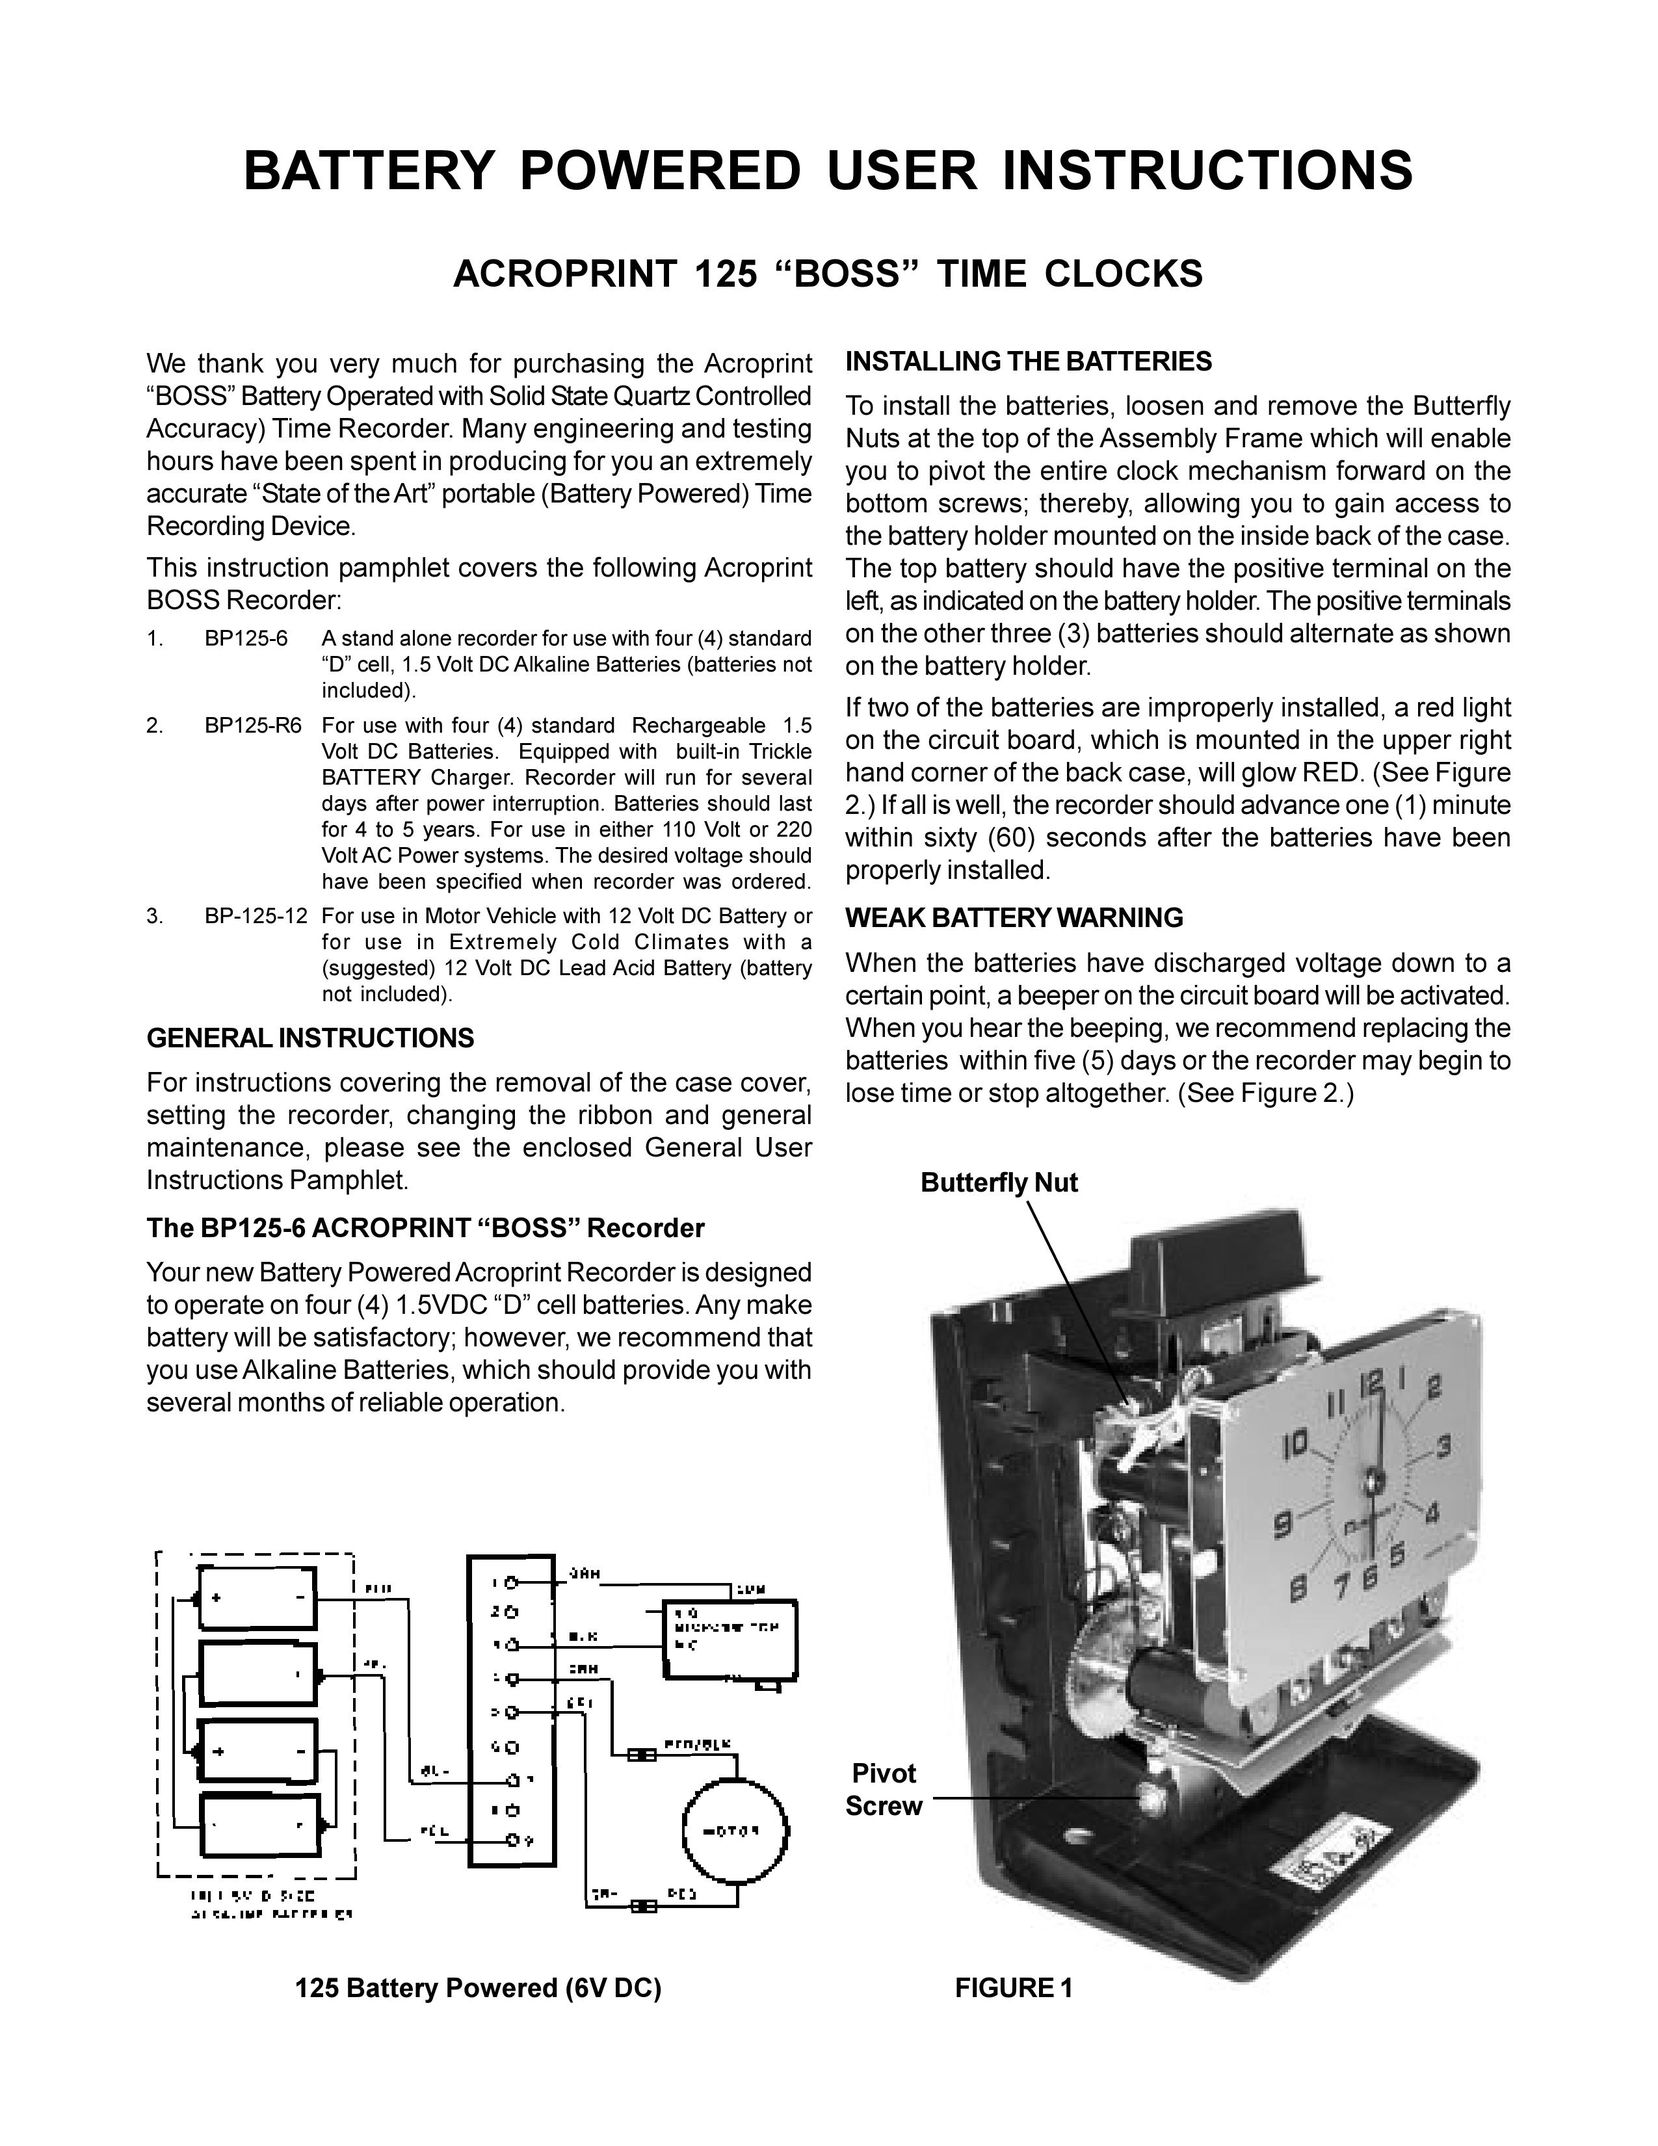 Acroprint BP125-R6 Time Clock User Manual